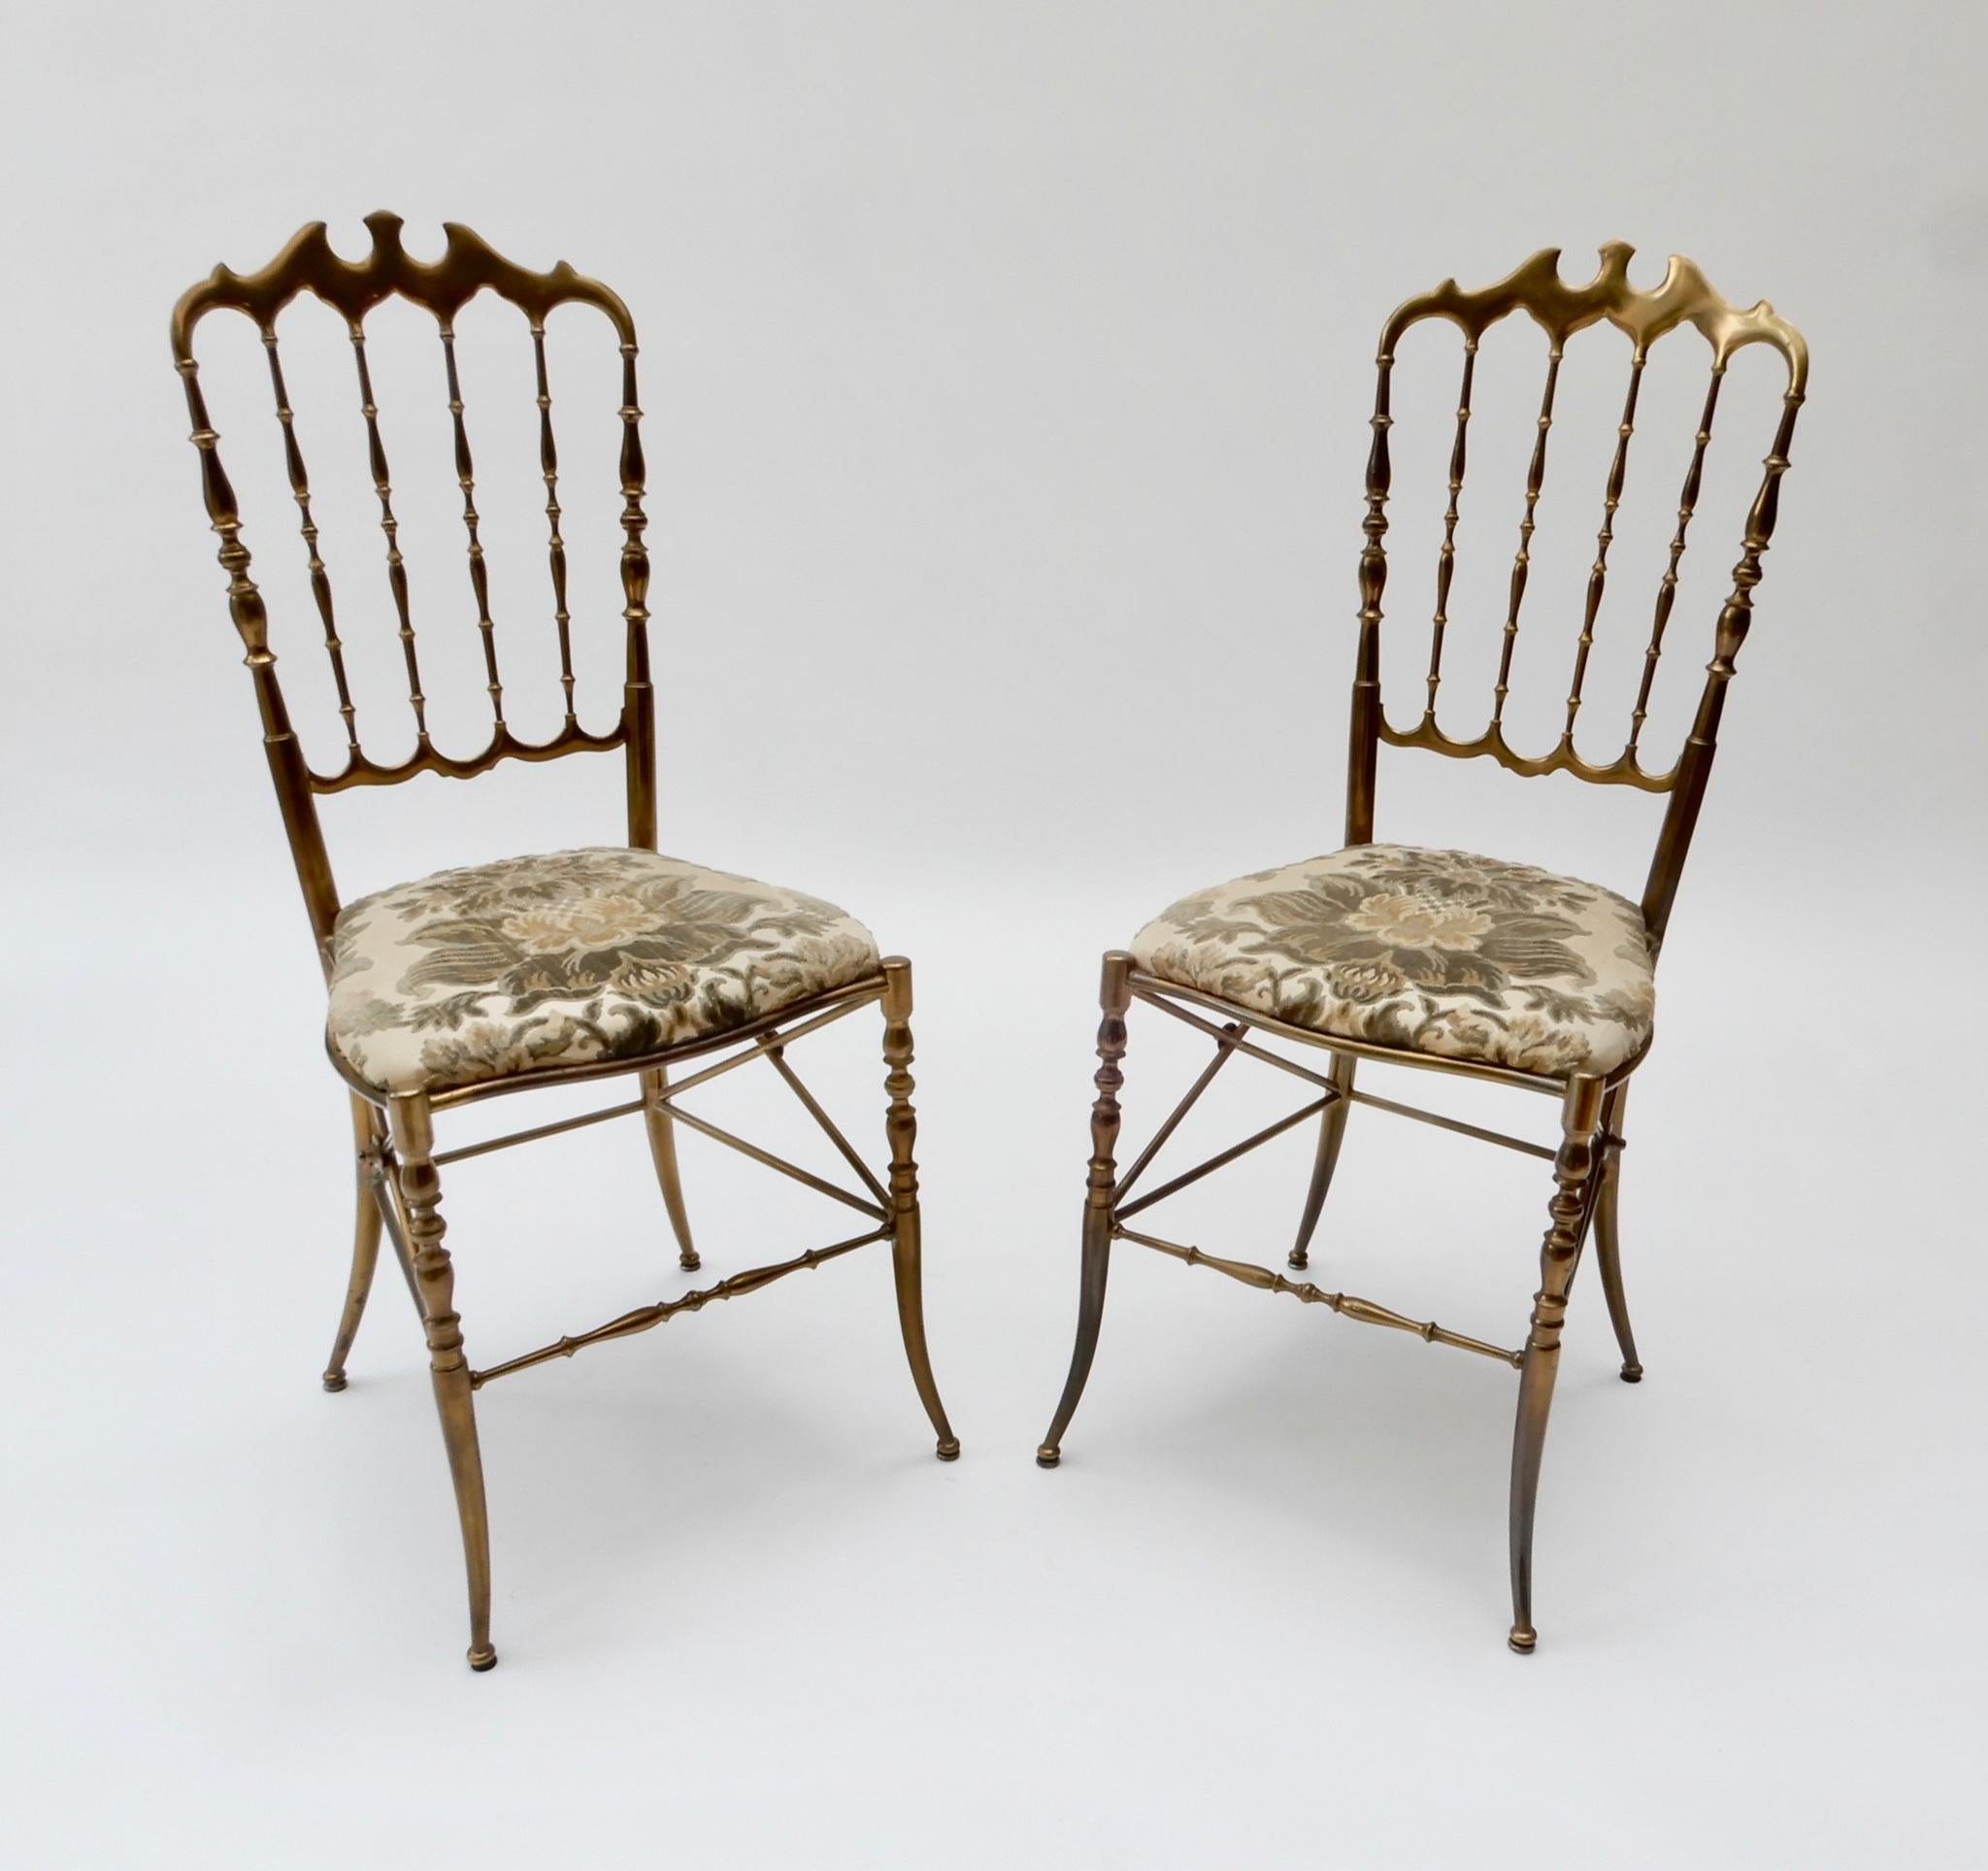 Pair of brass Italian chairs by Chiavari with the original fabric.